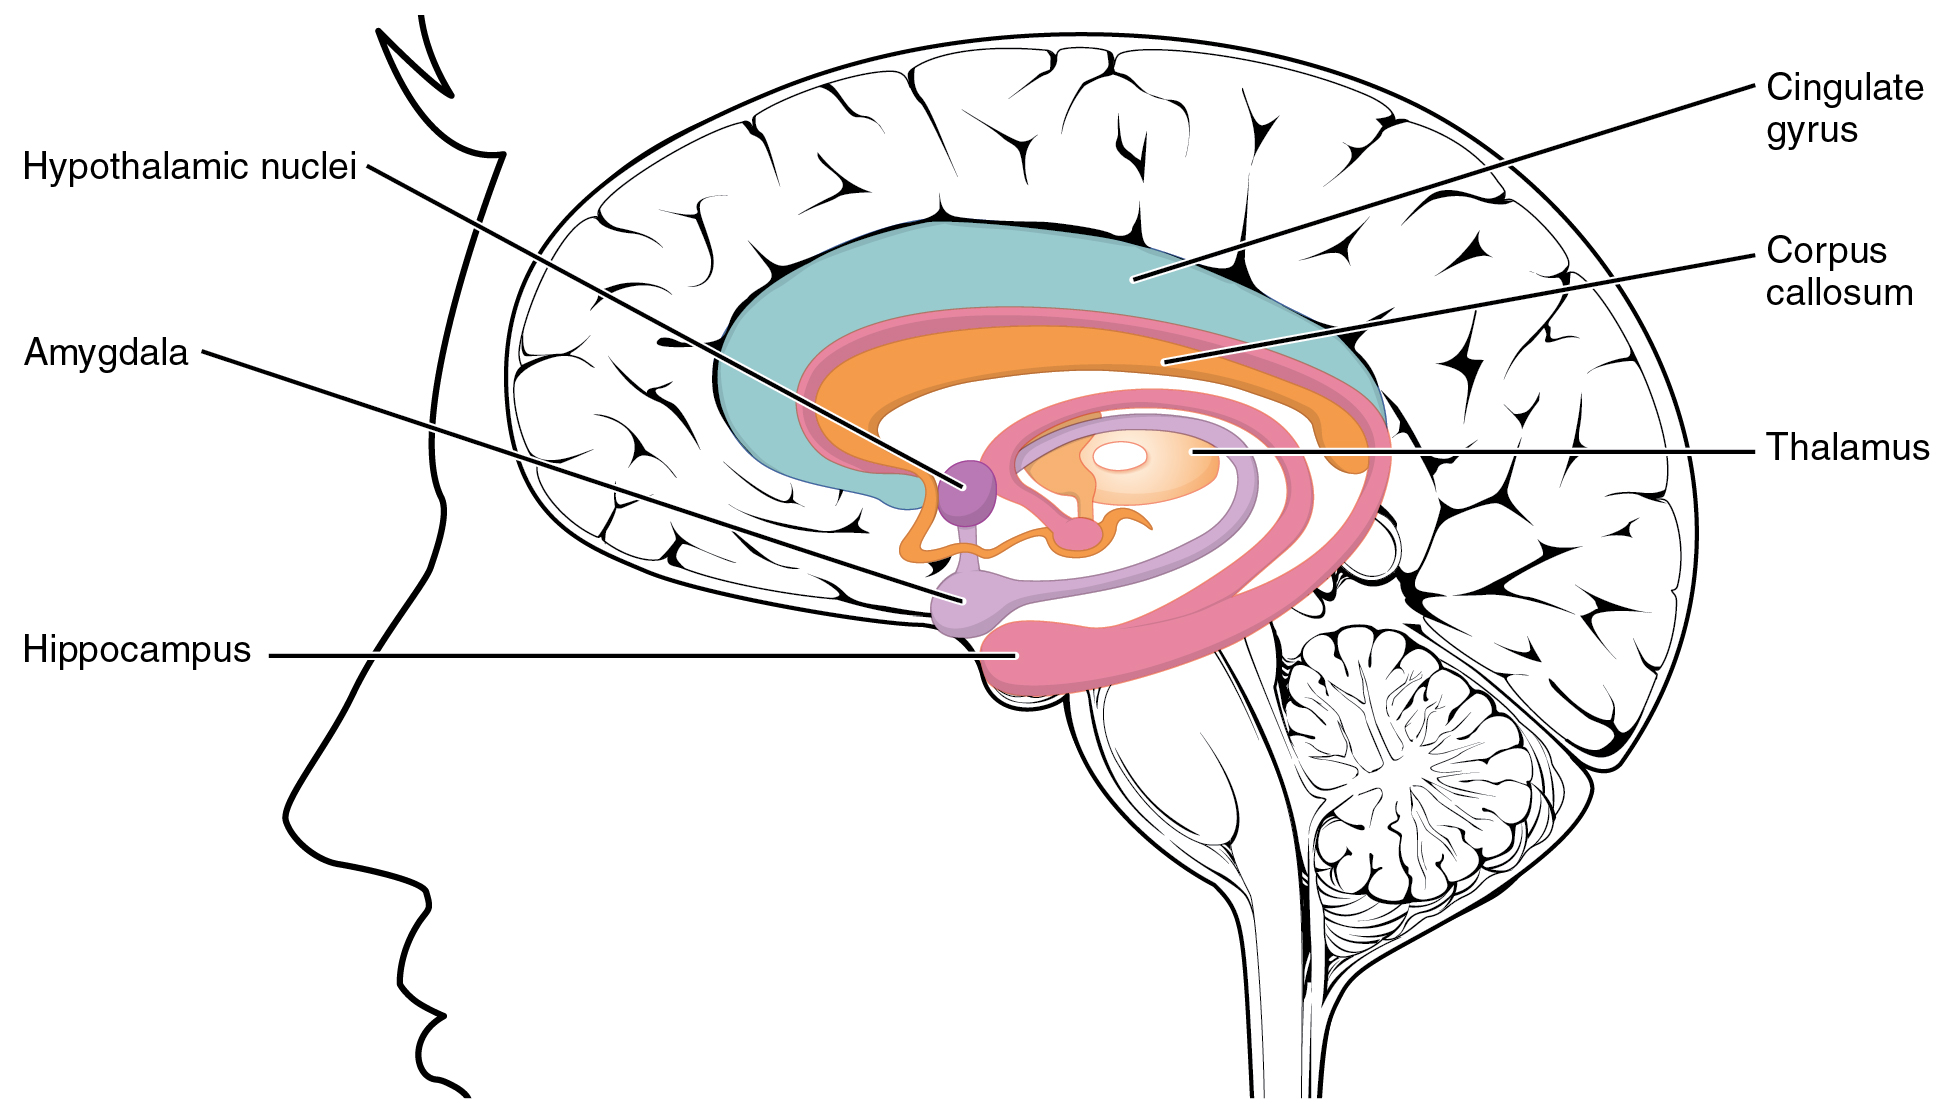 From superior: cingulate gyrus, corpus callosum, thalamus, hypothalamic nuclei, amygdala, hippocampus.